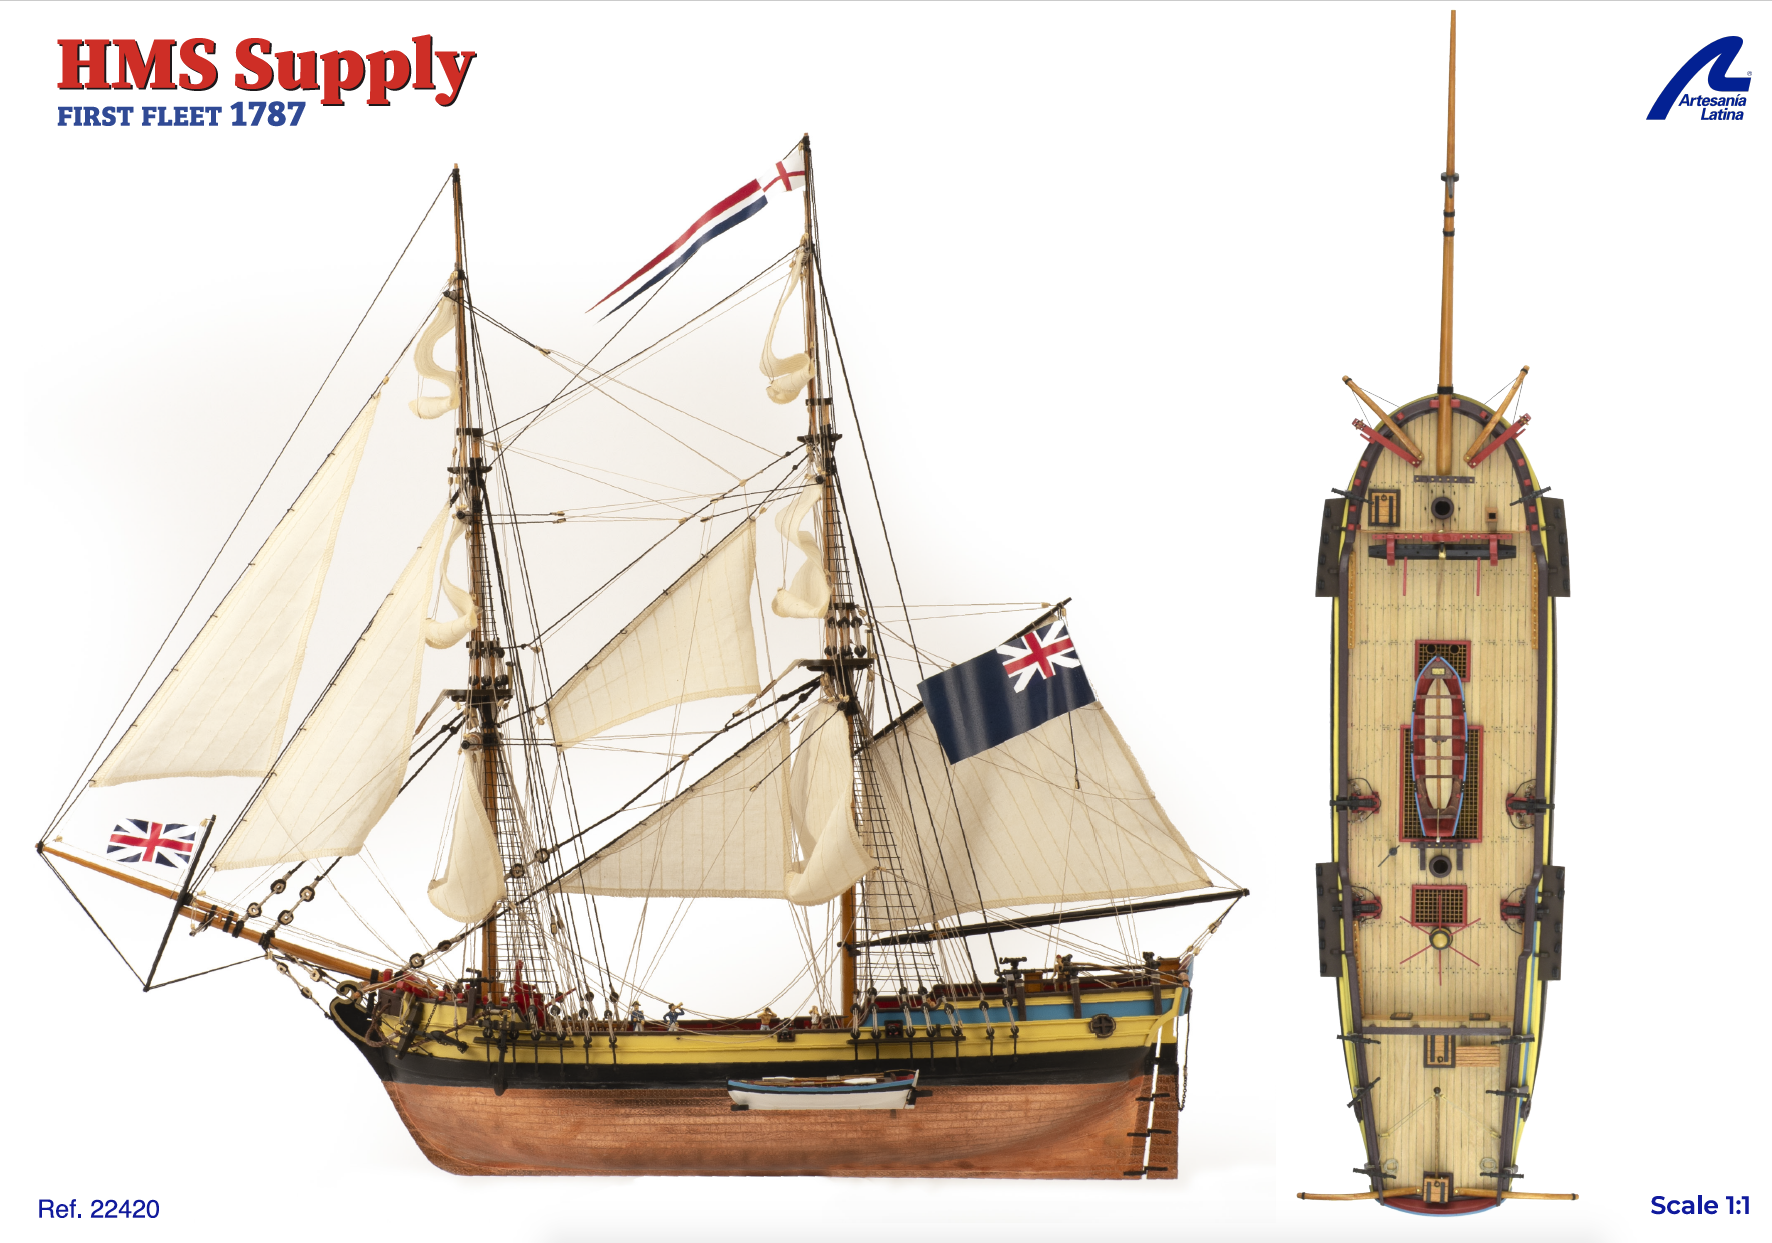 Plan Maquette Brigantin HMS Supply First Fleet 1797 (22420) par Artesanía Latina.